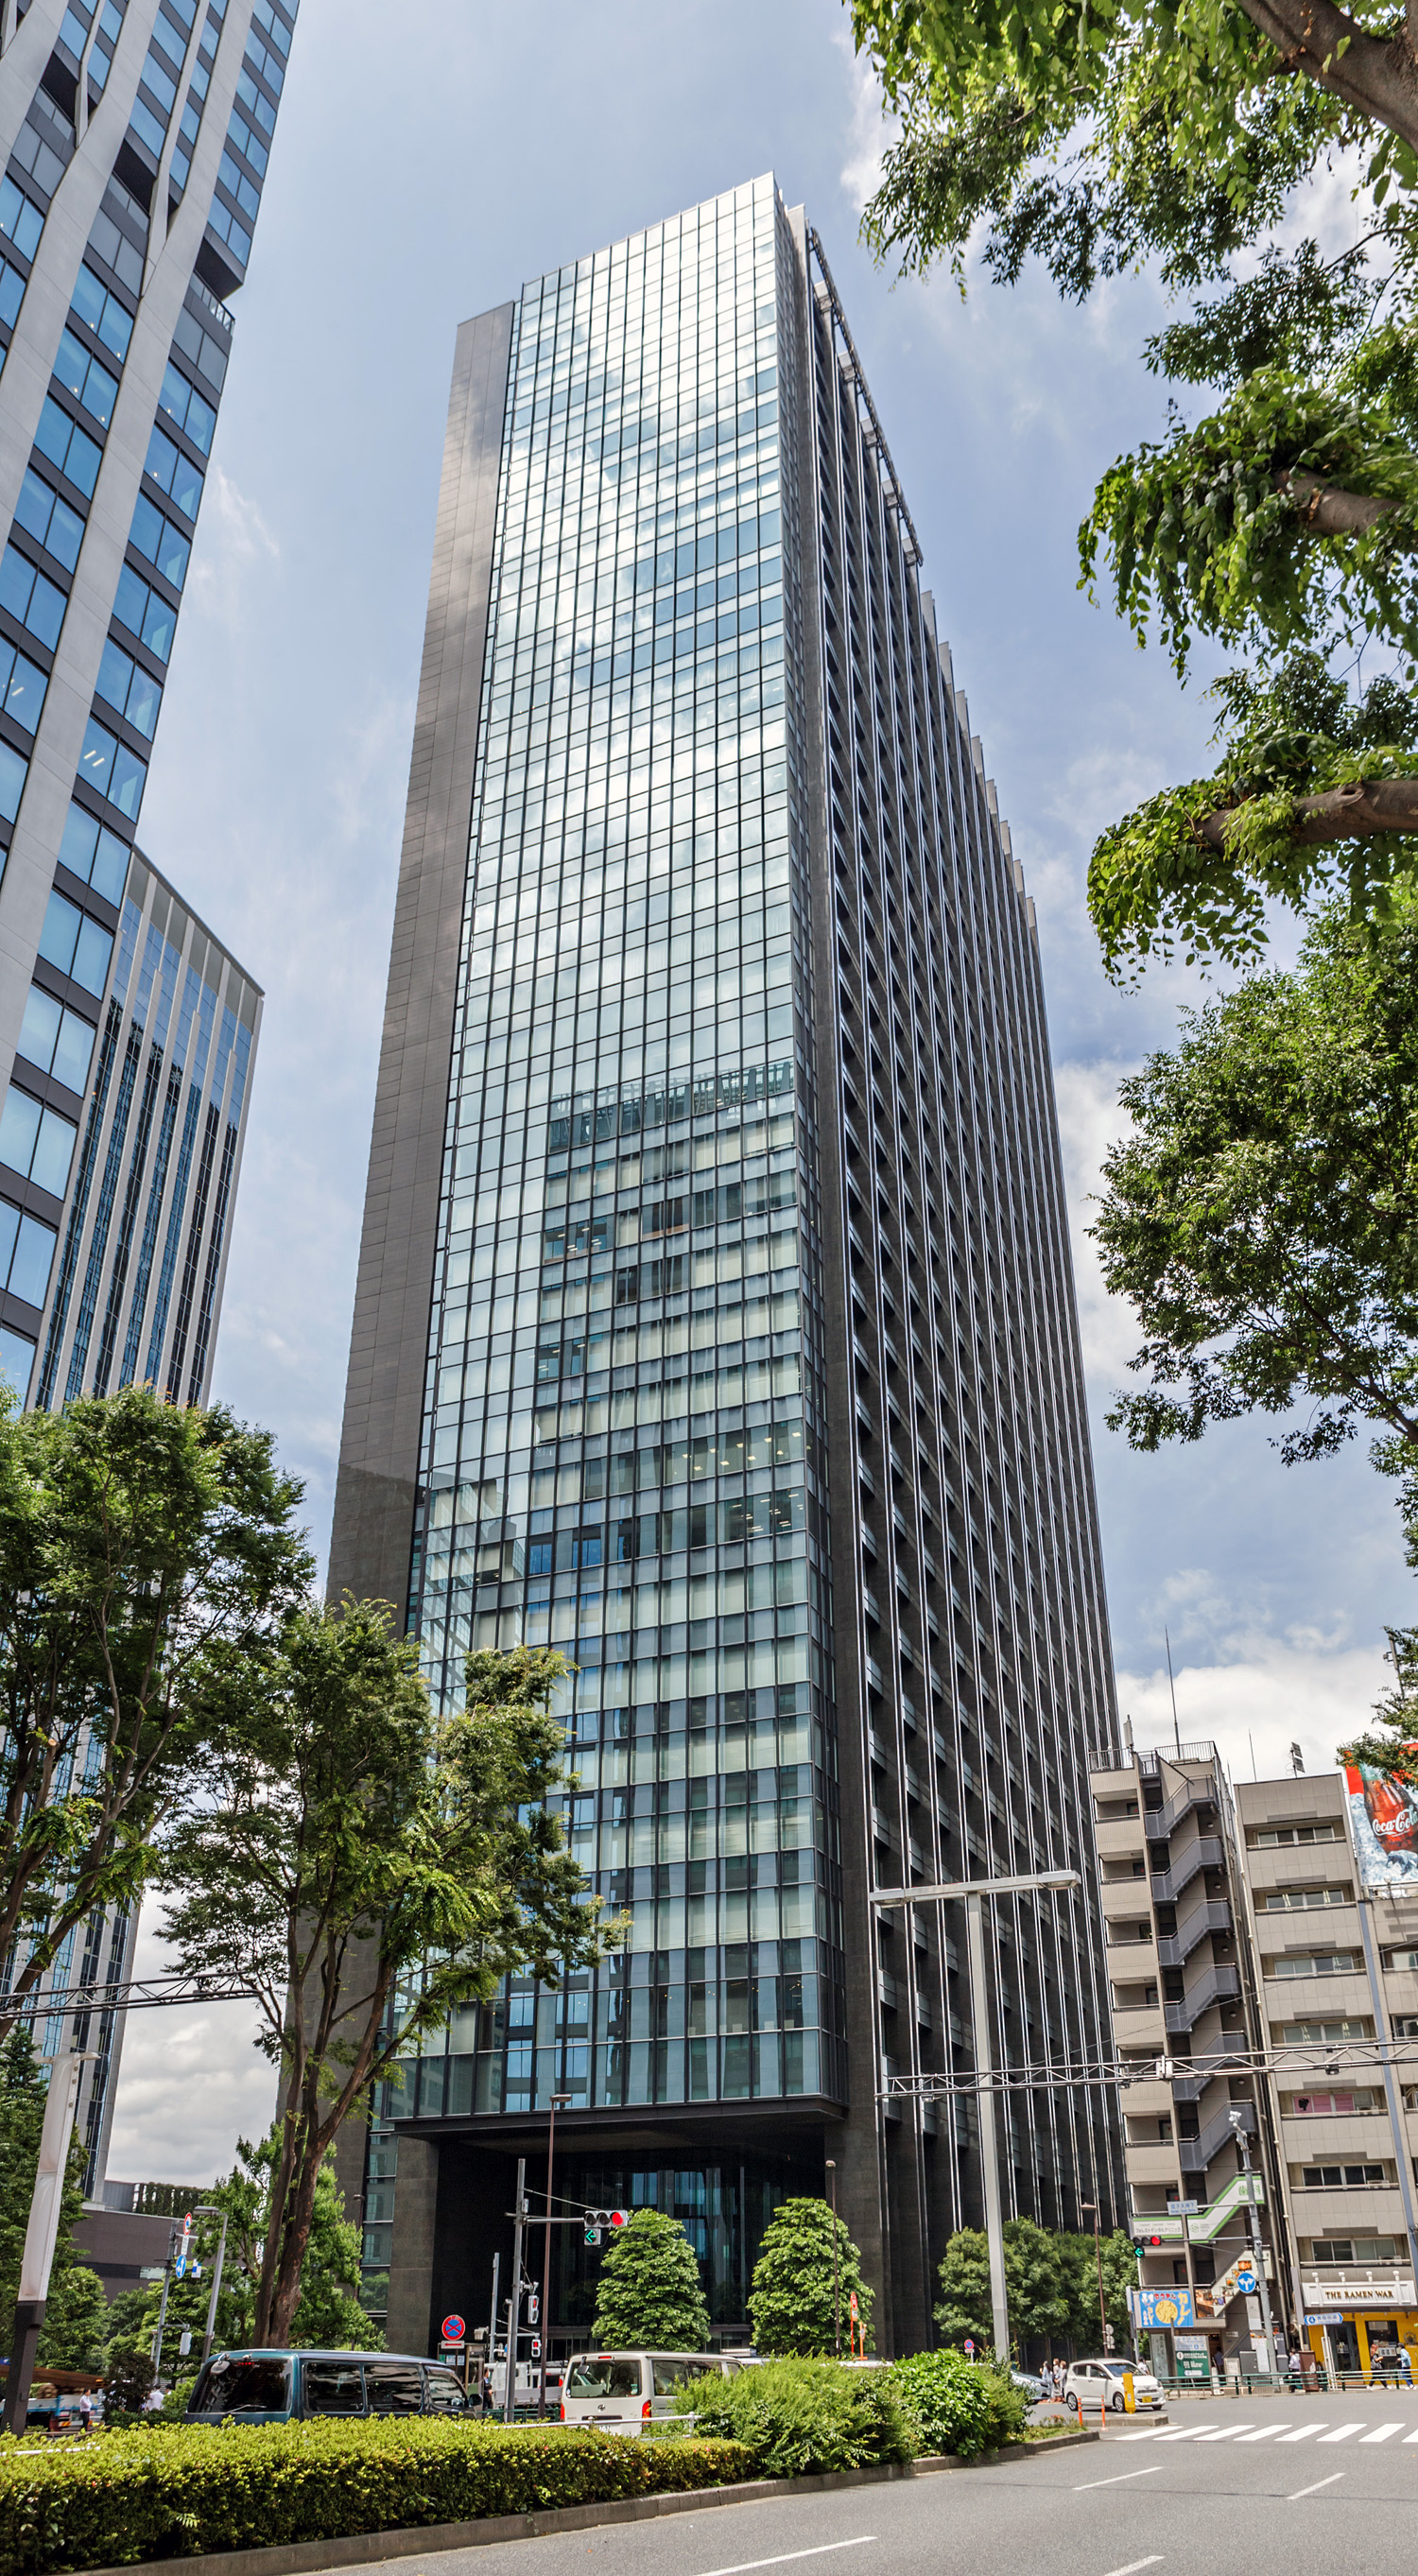 Sumitomo Fudosan Shinjuku Grand Tower, Tokyo - View from the south. © Mathias Beinling